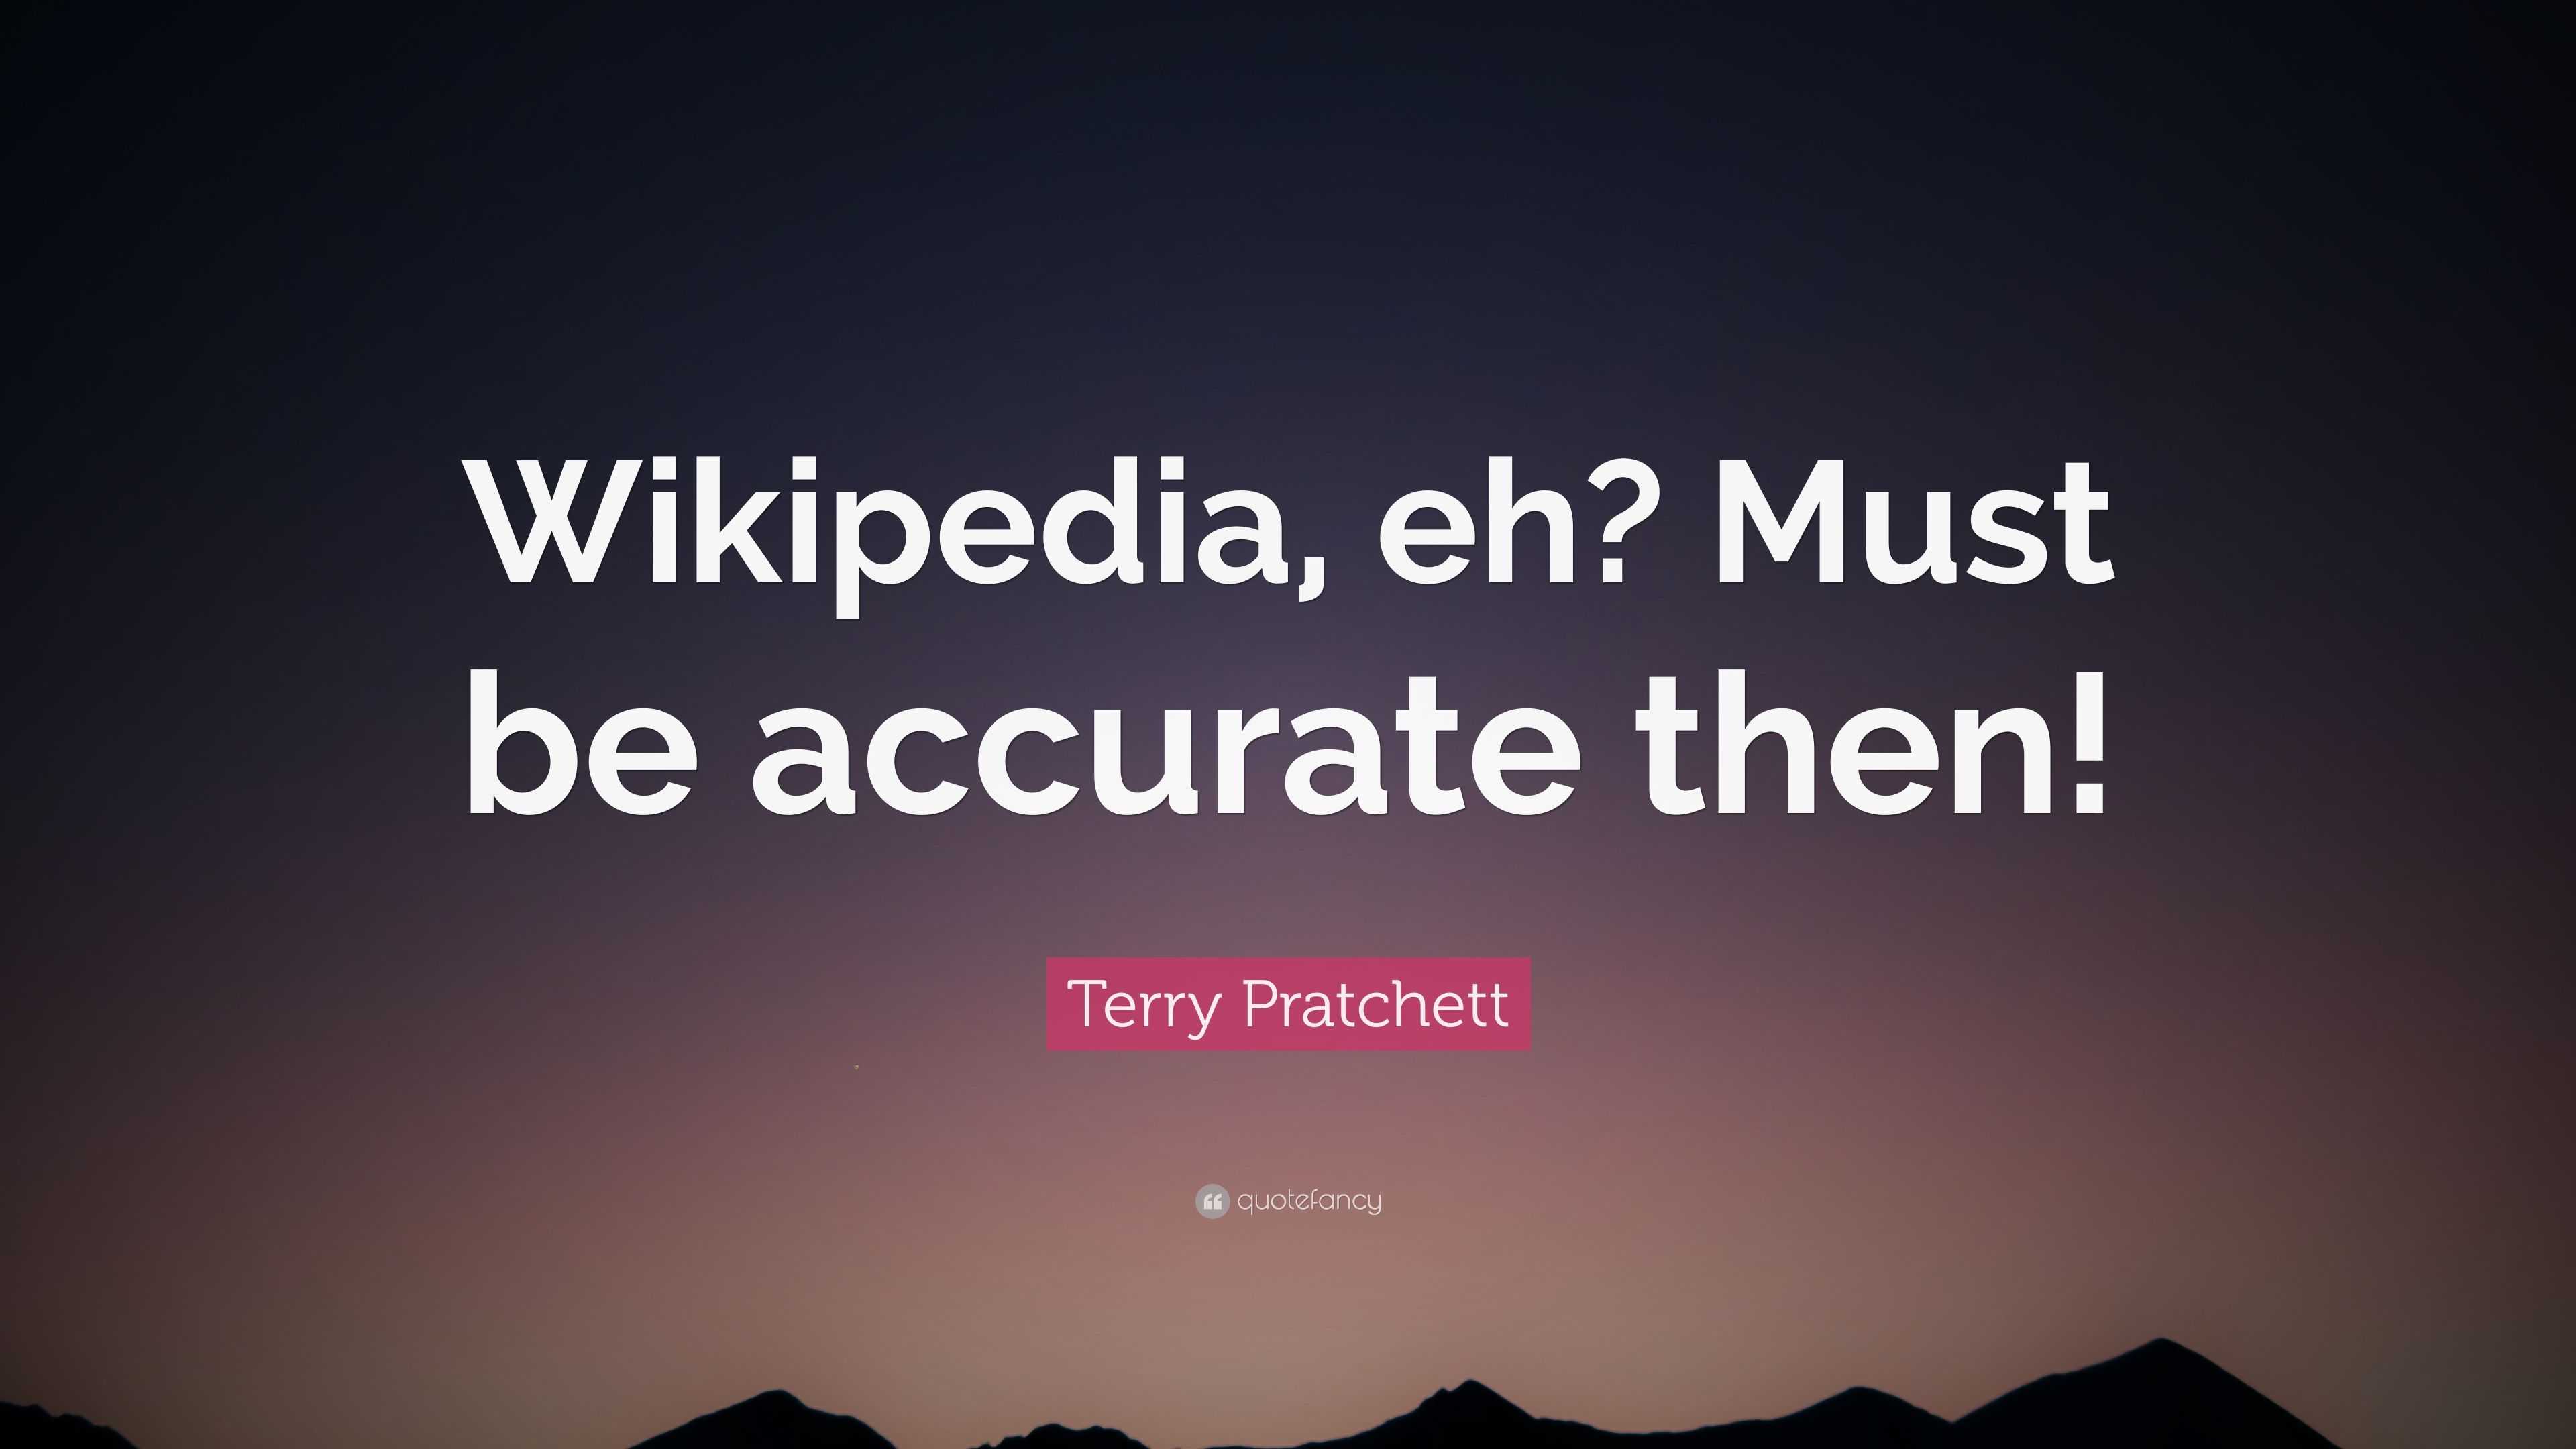 Terry Pratchett - Wikipedia